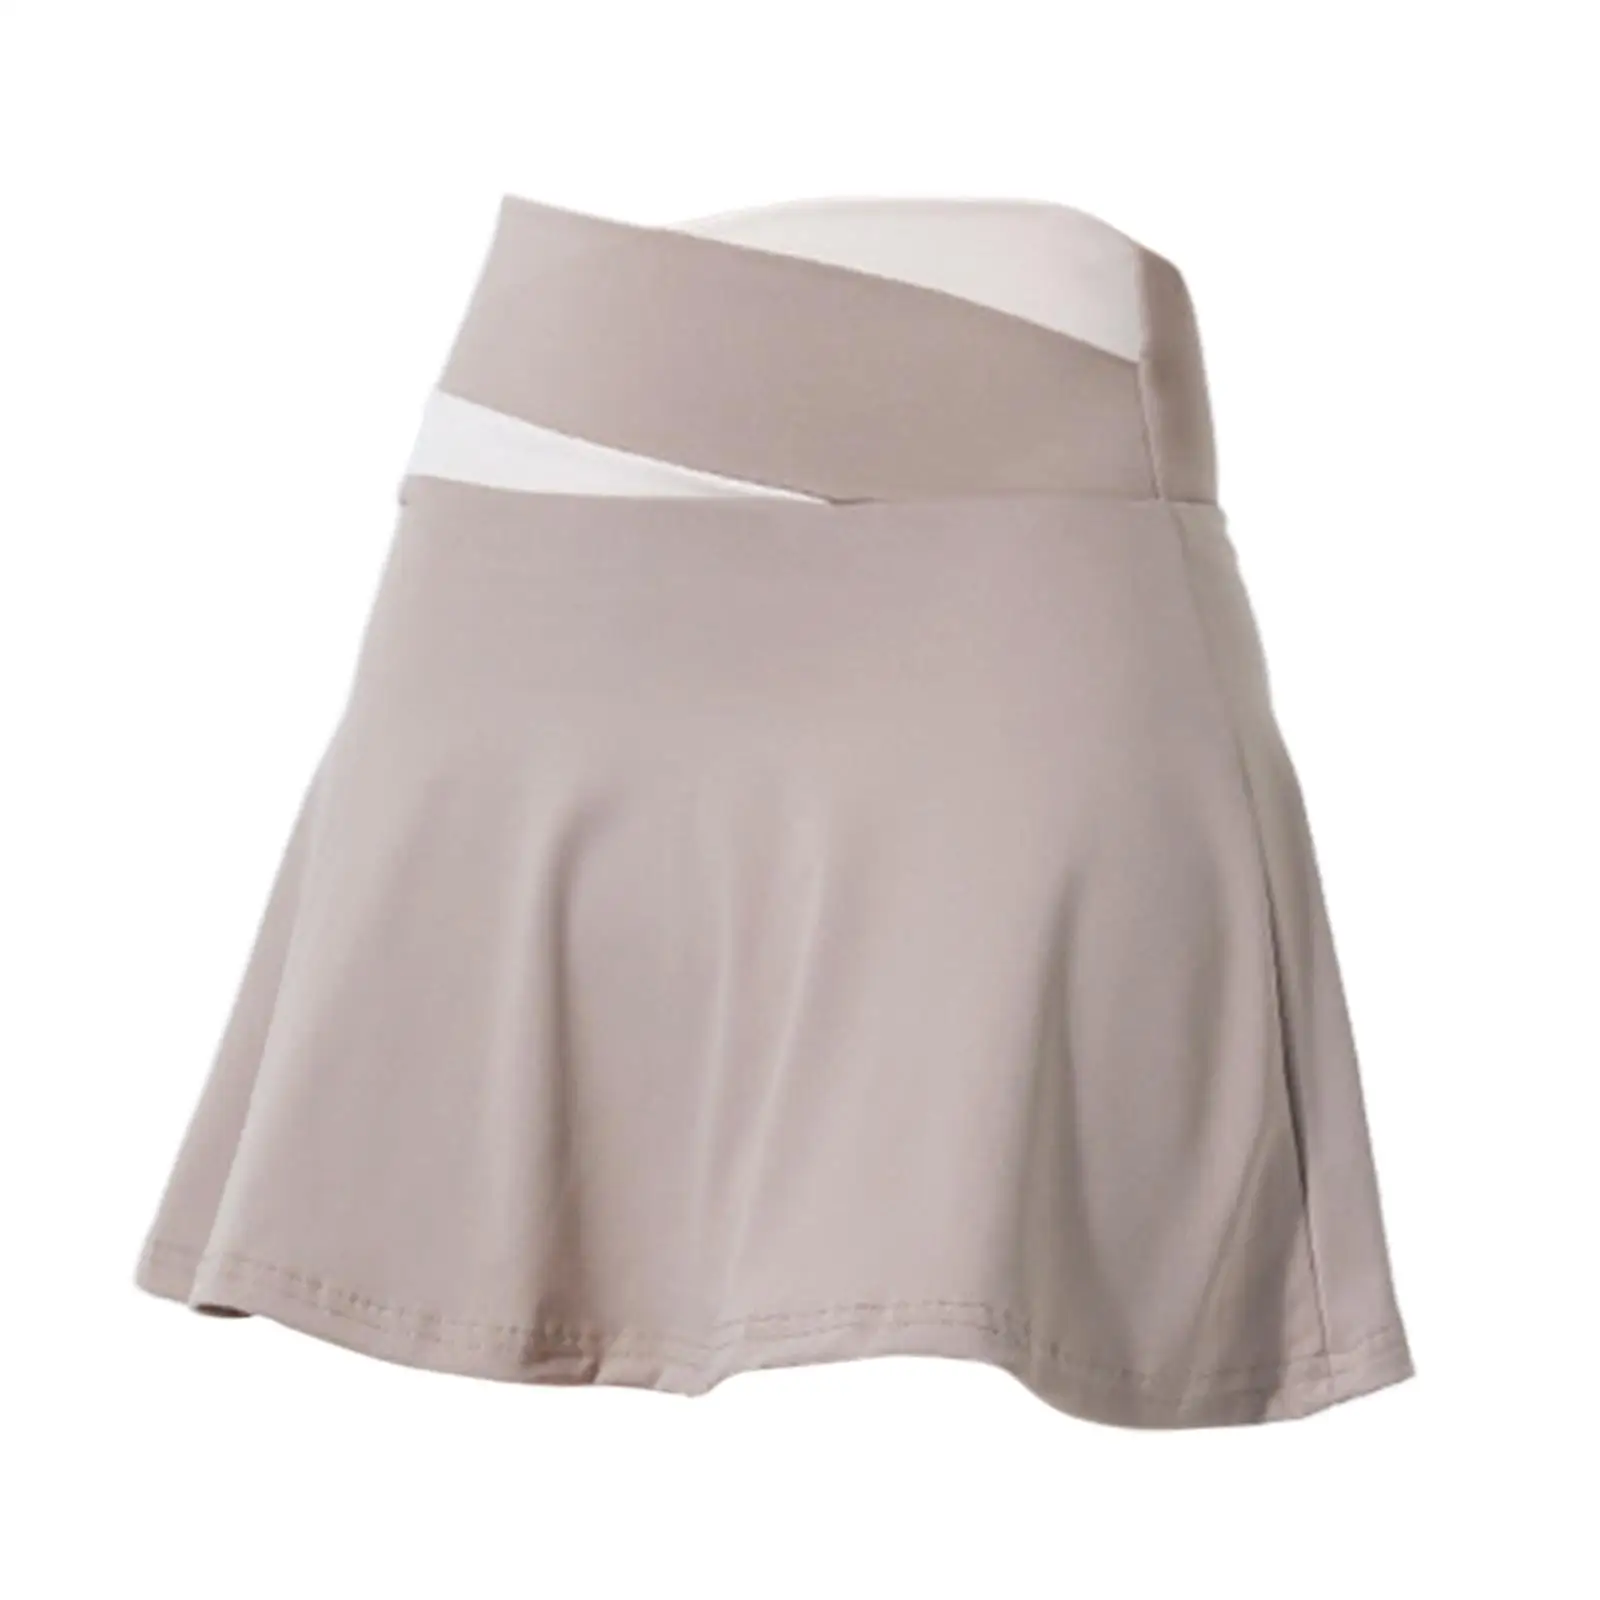 Tennis Skirts Short Skirt Athletic Comfortable Gymwear Women`s Culottes Skirt Badminton Skirt for Golf Running Yoga Tennis Home